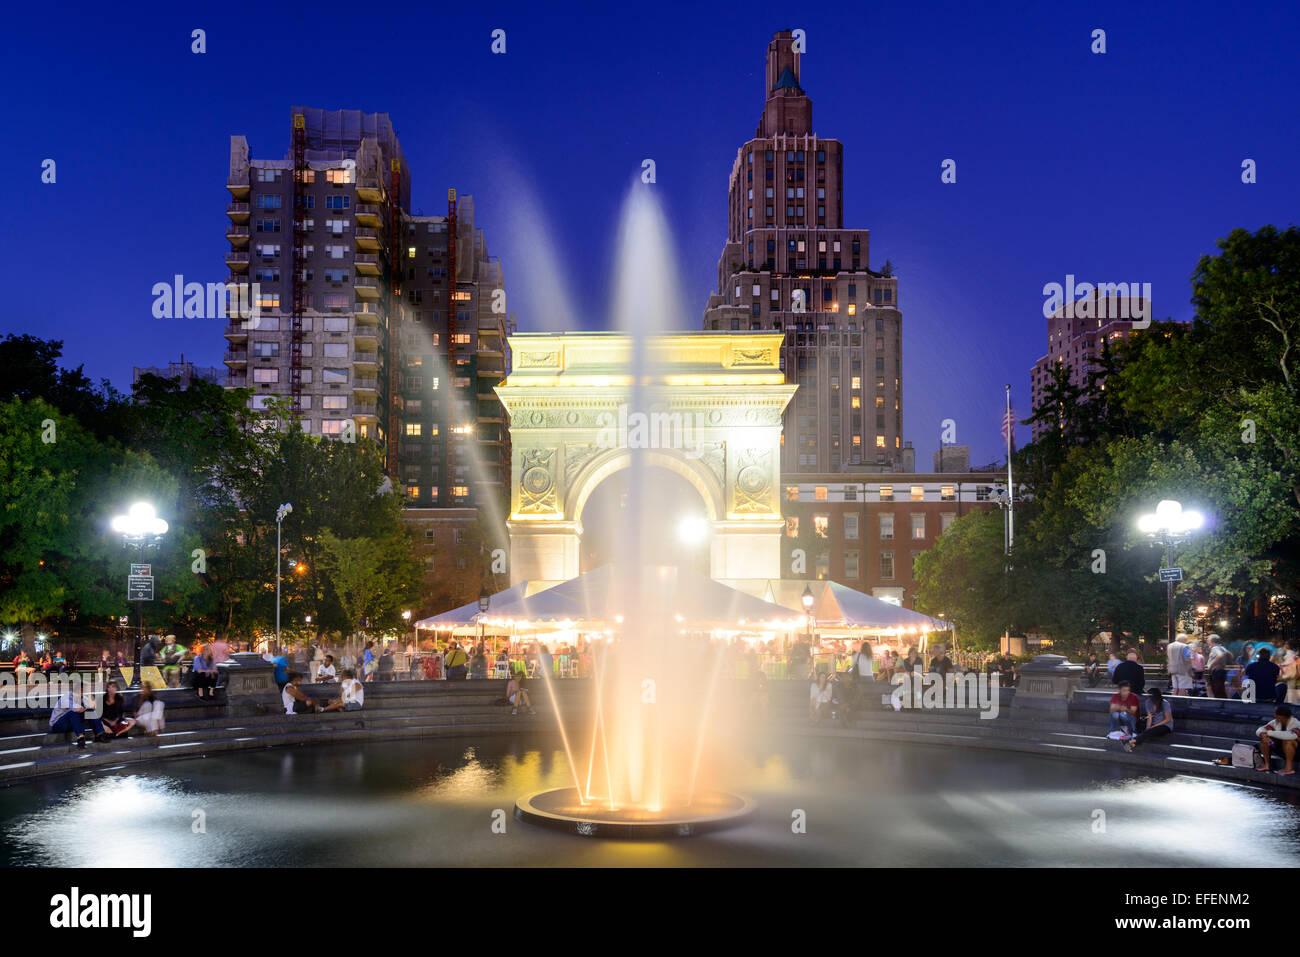 Crowds enjoy a summer night in Washington Square Park. Stock Photo